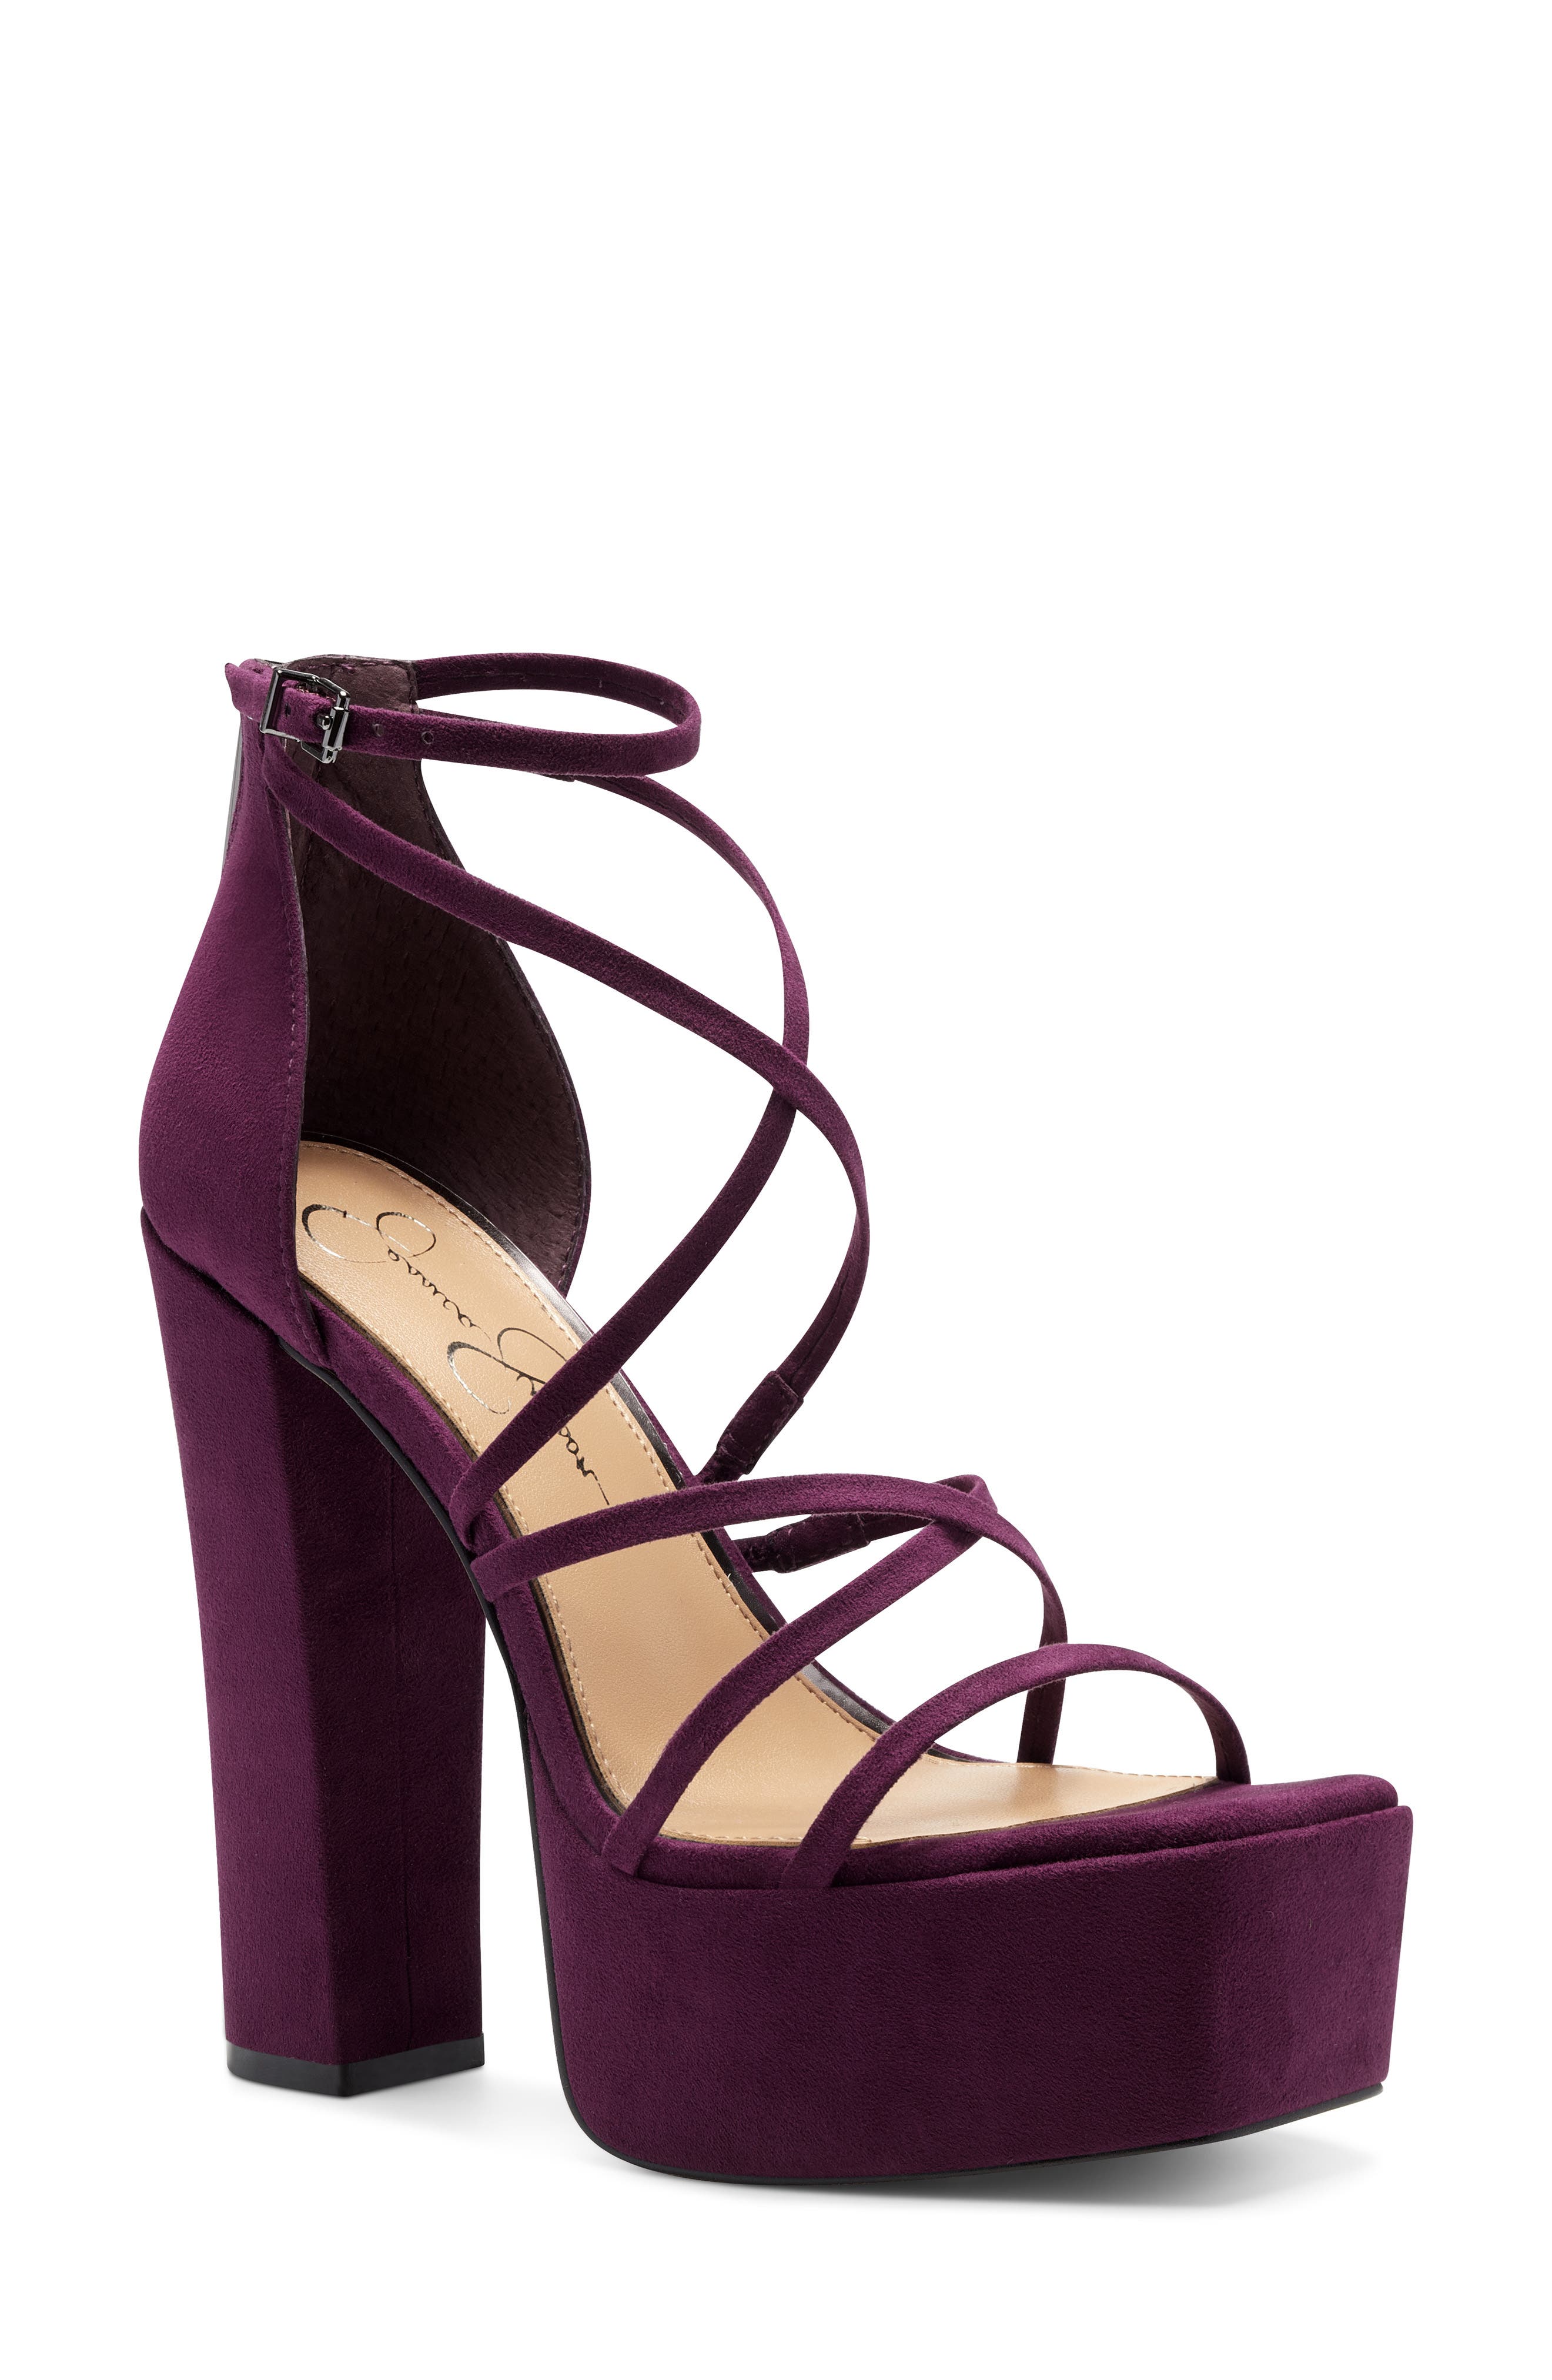 light purple block heels